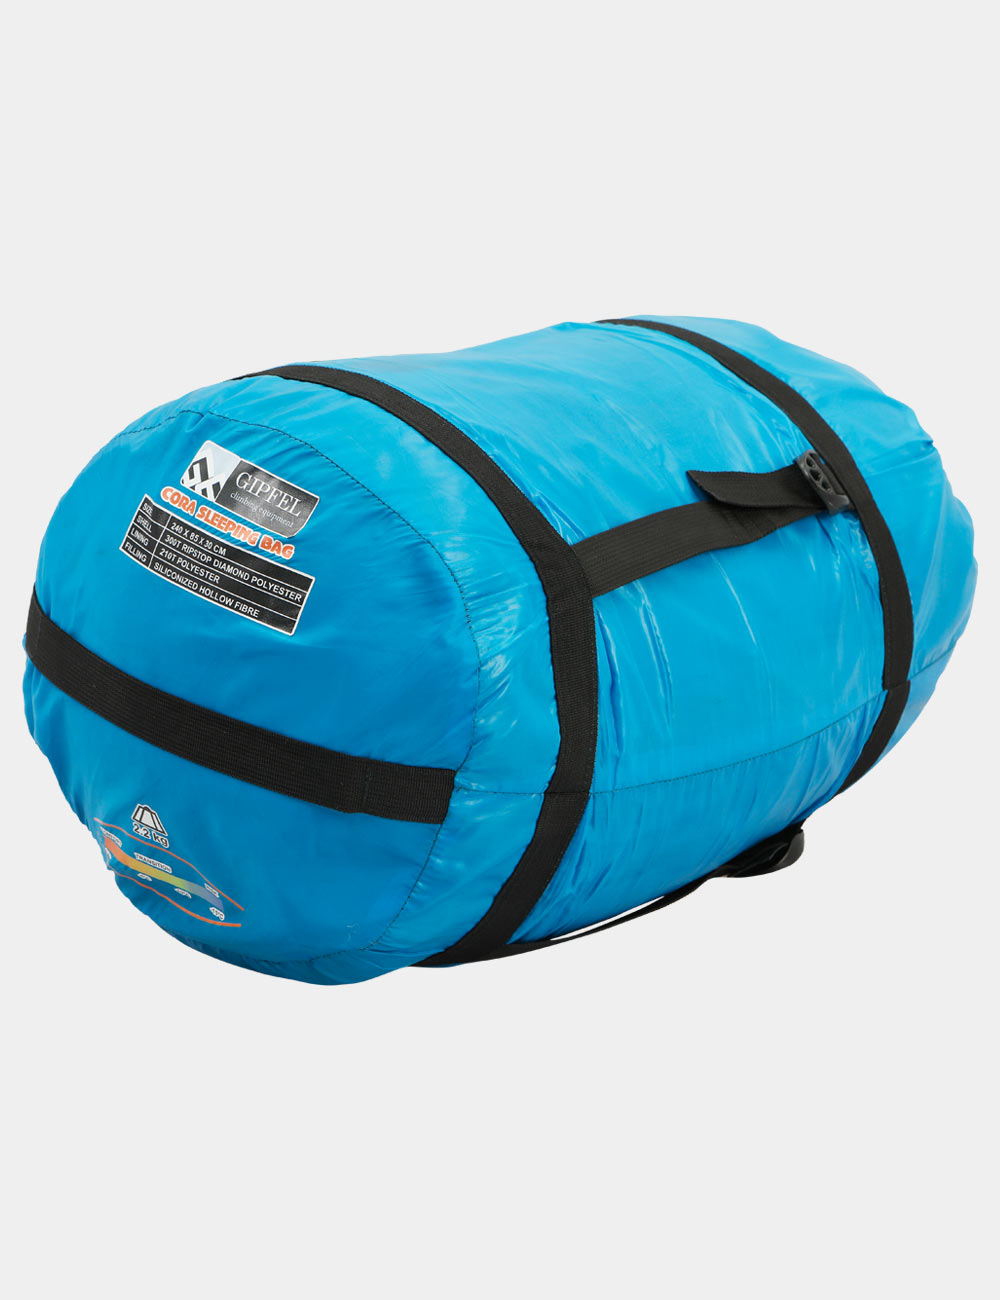 Buy Gipfel Cora Sleeping Bag -10°C in India | Gipfel Climbing Equipment